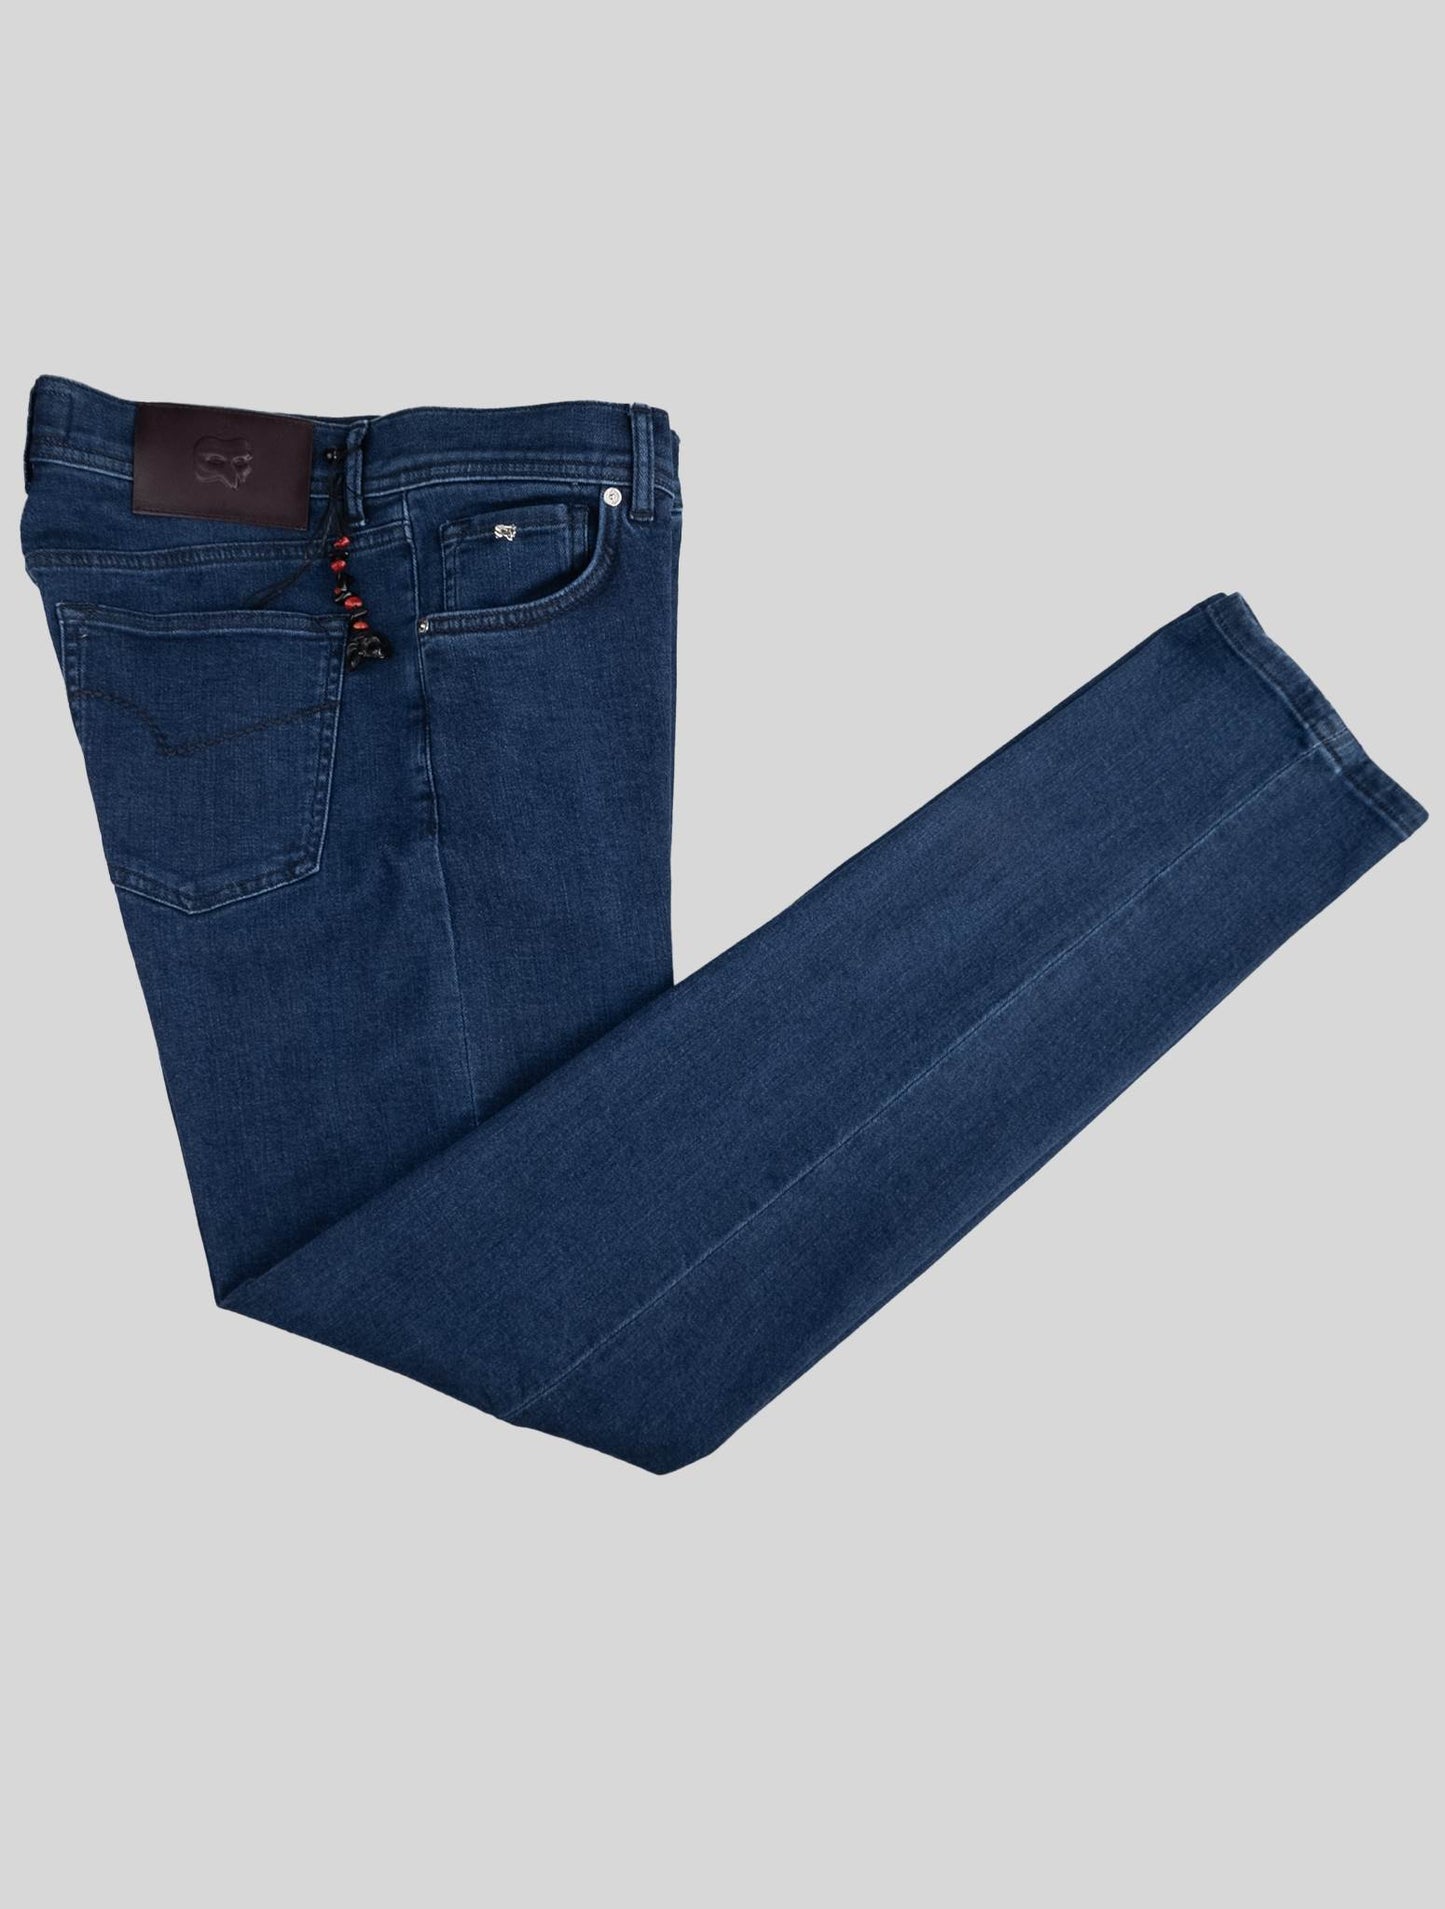 Marco Pescarolo Blue Cotton Cashmere Ea Jeans